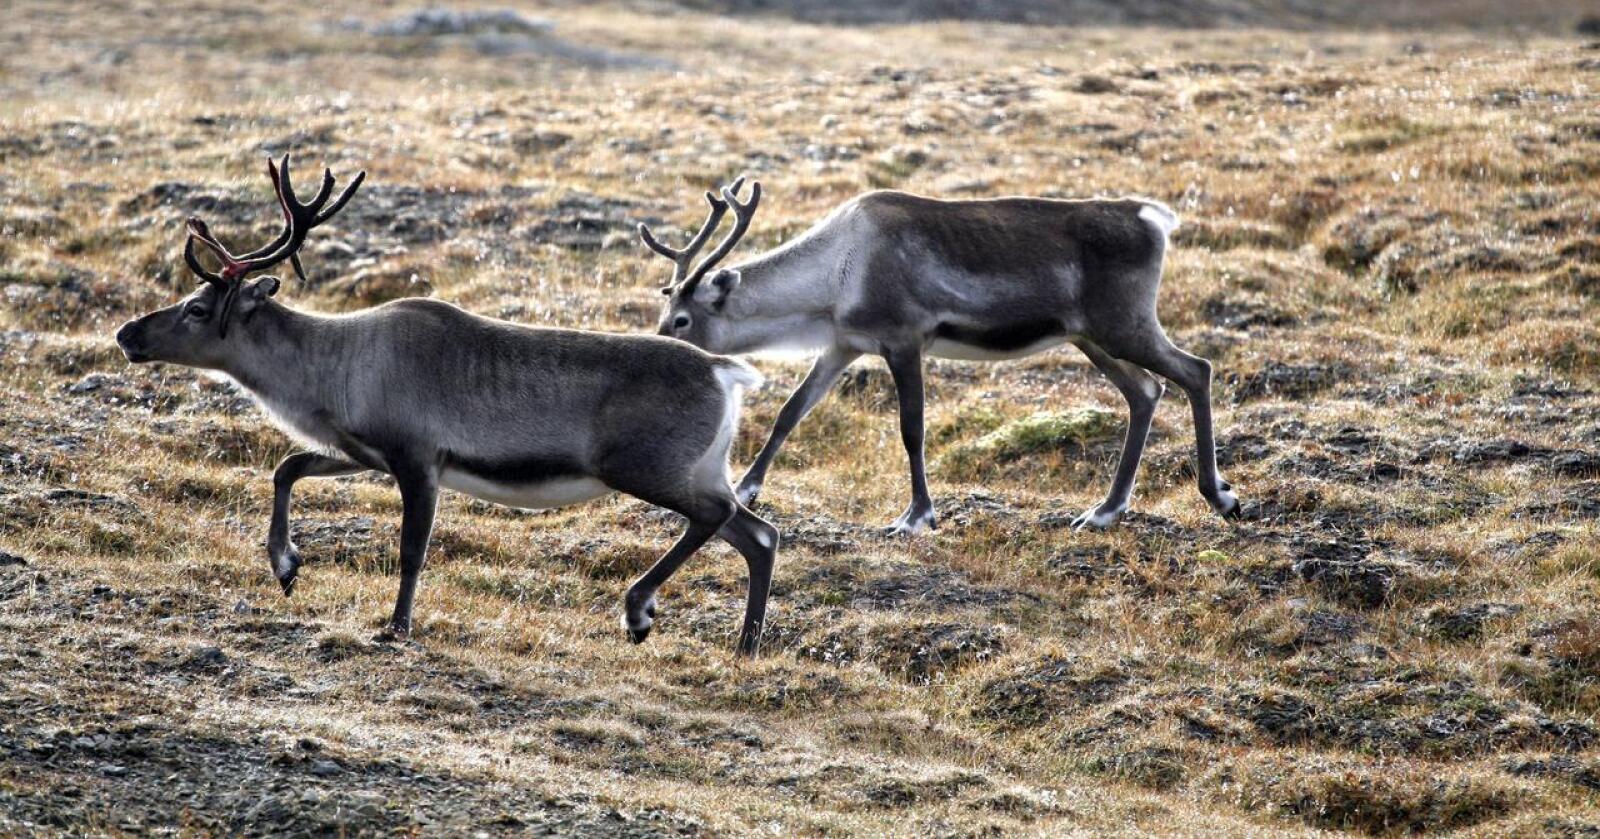 Klassisk skrantesjuke er den smittsomme varianten som vi tidligere har påvist hos villrein på Nordfjella og Hardangervidda. Foto: Mikael Breding/Mostphotos